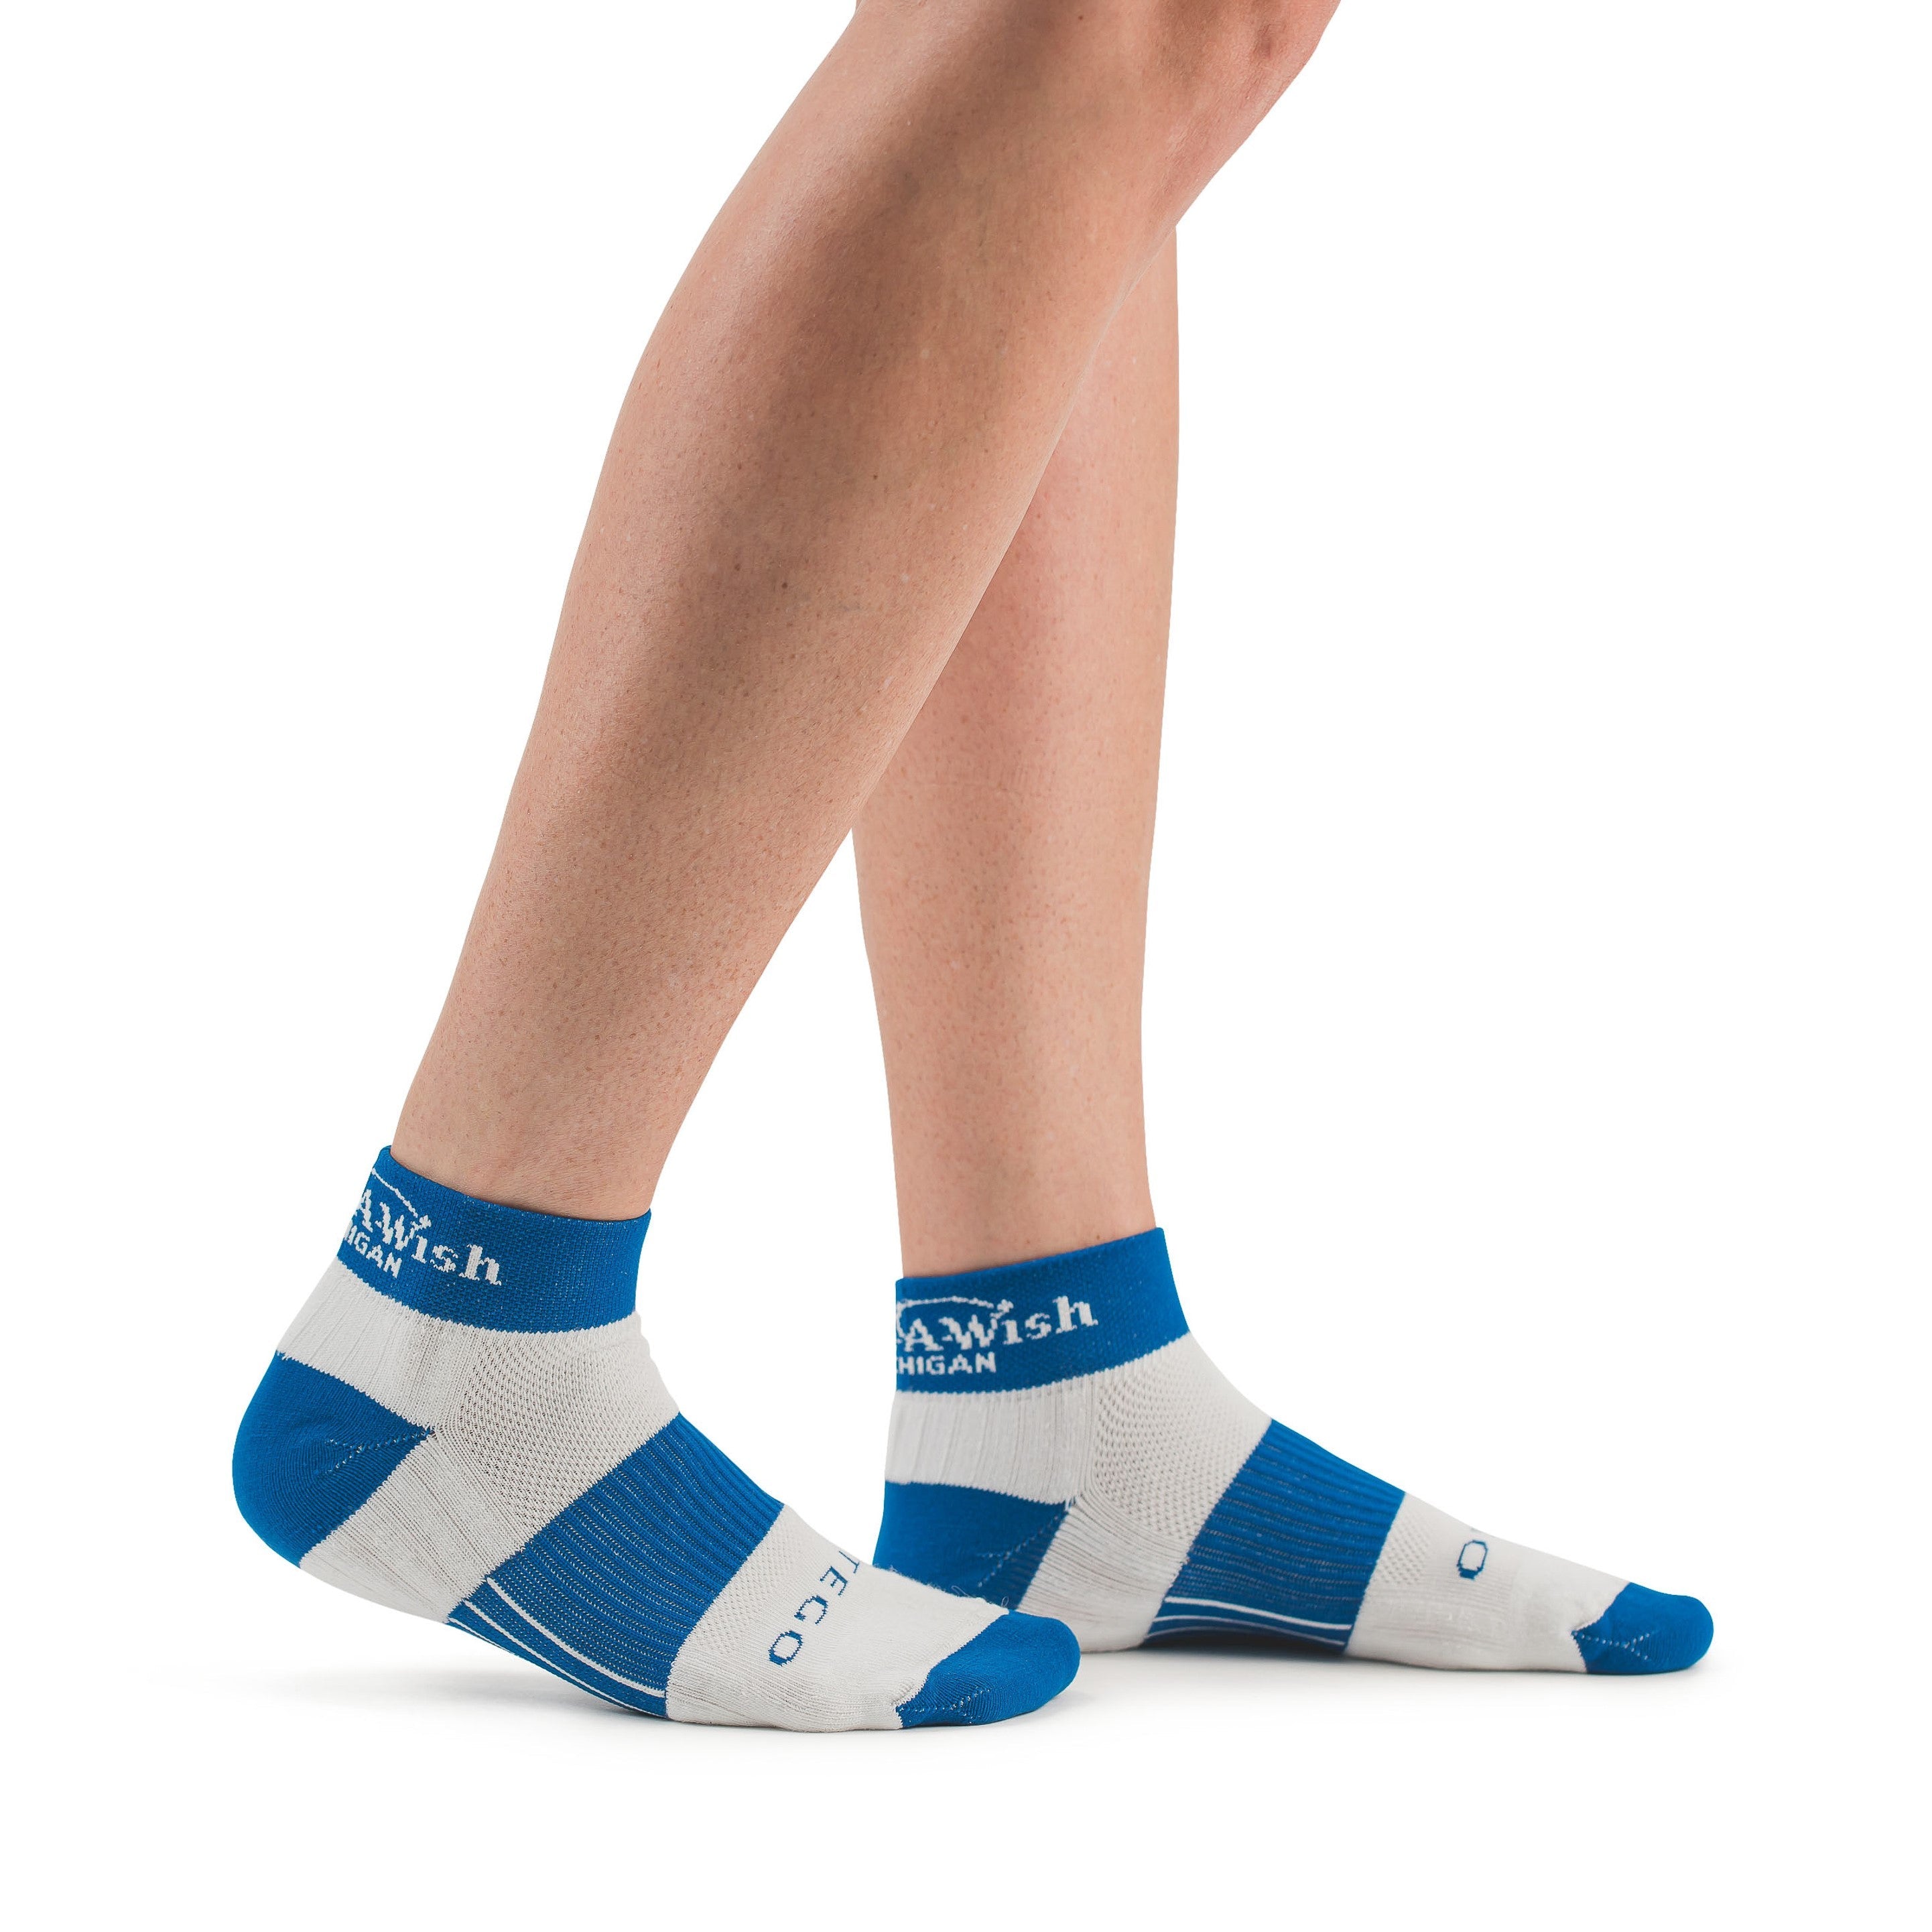 Stego StrideTec Cushioned 1/4 Crew Socks – Socks Addict